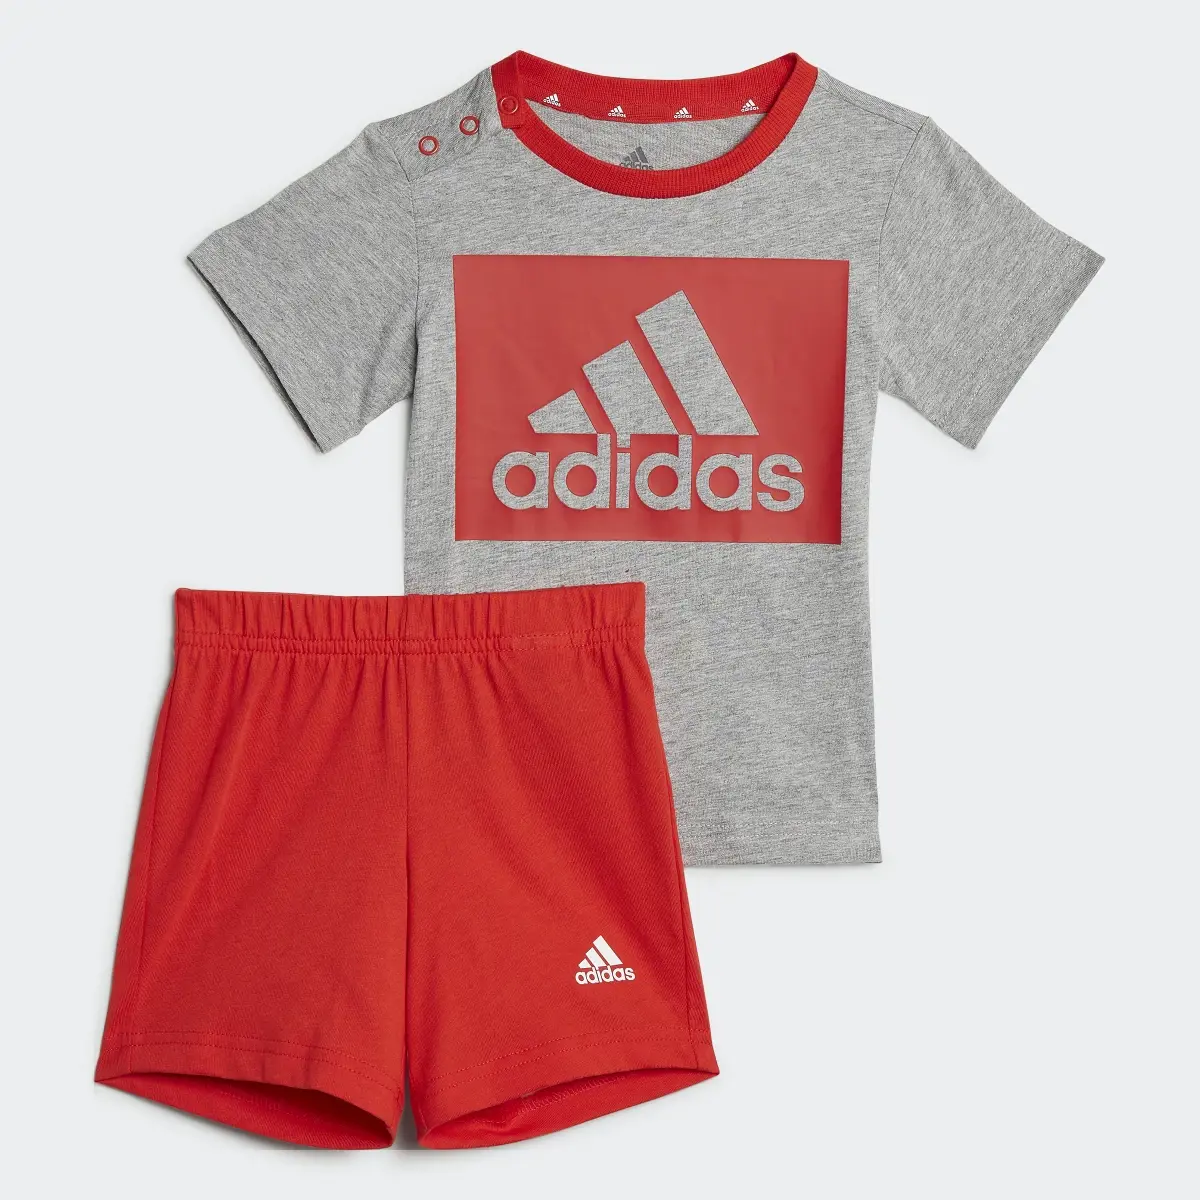 Adidas Essentials Tee and Shorts Set. 2